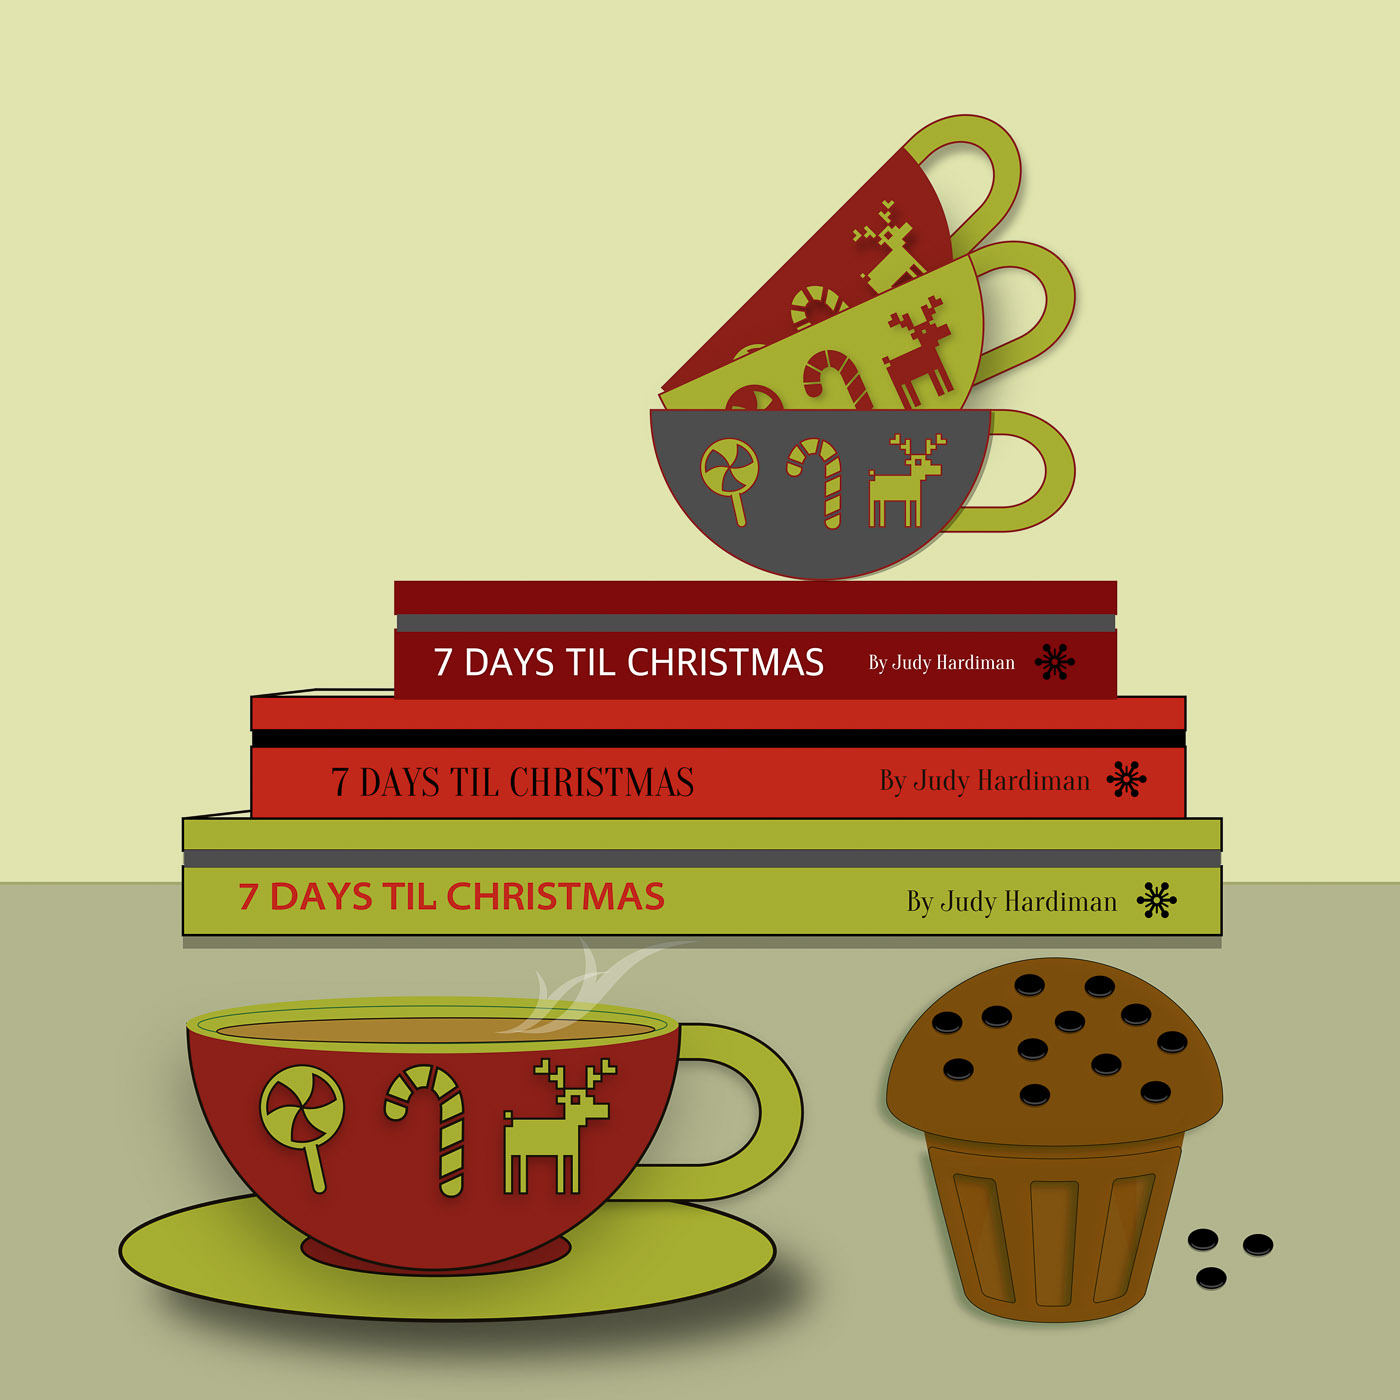 7 Days til Christmas | Hardiman Images